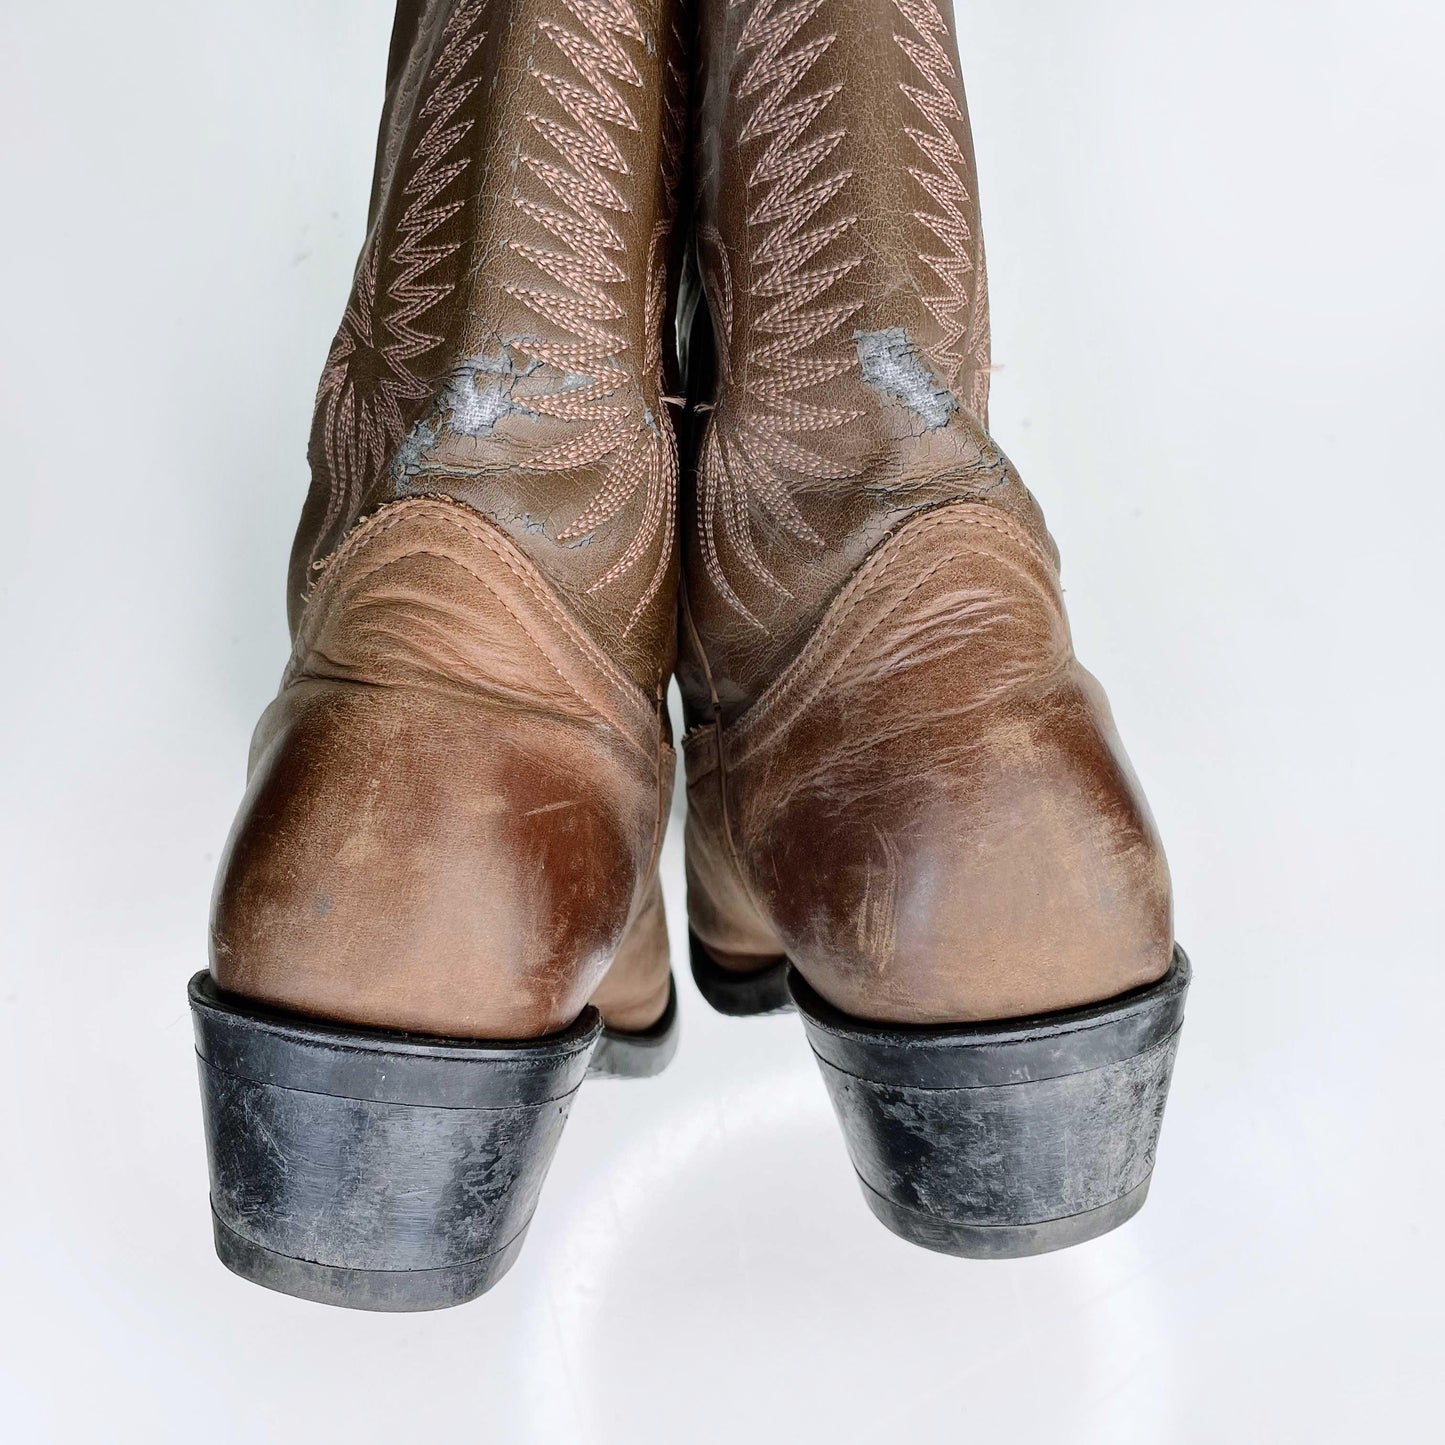 vintage silver rebel cowboy boots - size 8.5 M